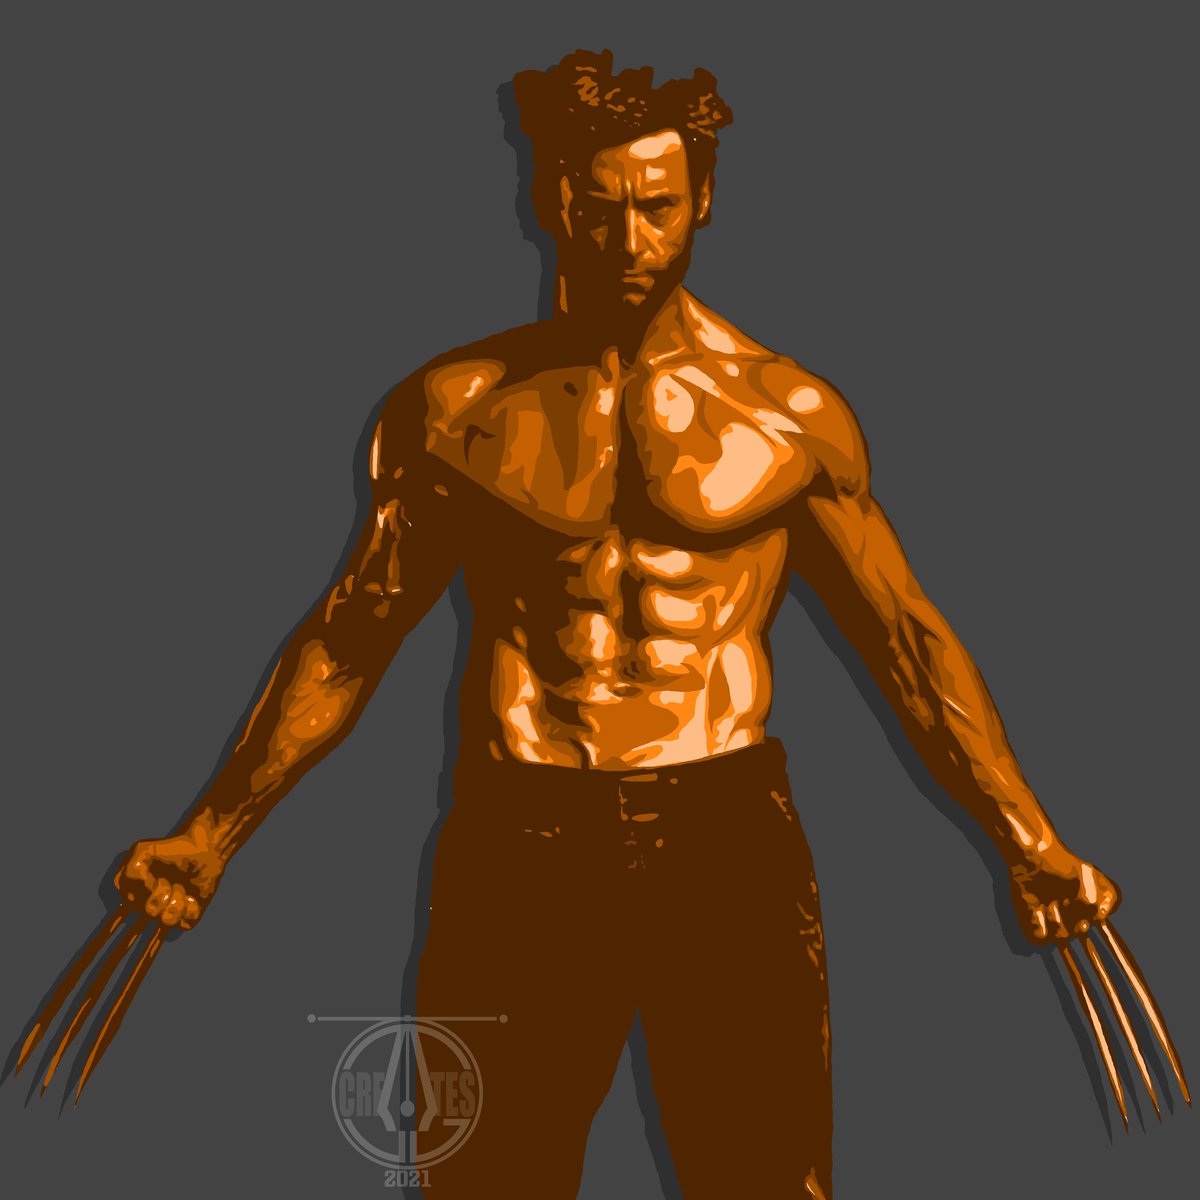 Wolverine
#Wolverine #Wolverineart #Wolverinefanart #vexel #vexelart #vectorart #vector #Art #artist #artph #filipinoartist #artphilippines #digitalart #digitalartist #Art #artwork #artph #digiart #digitalart #digitalartininstagram #digitalartist #artoftheday #digitalartoftheday